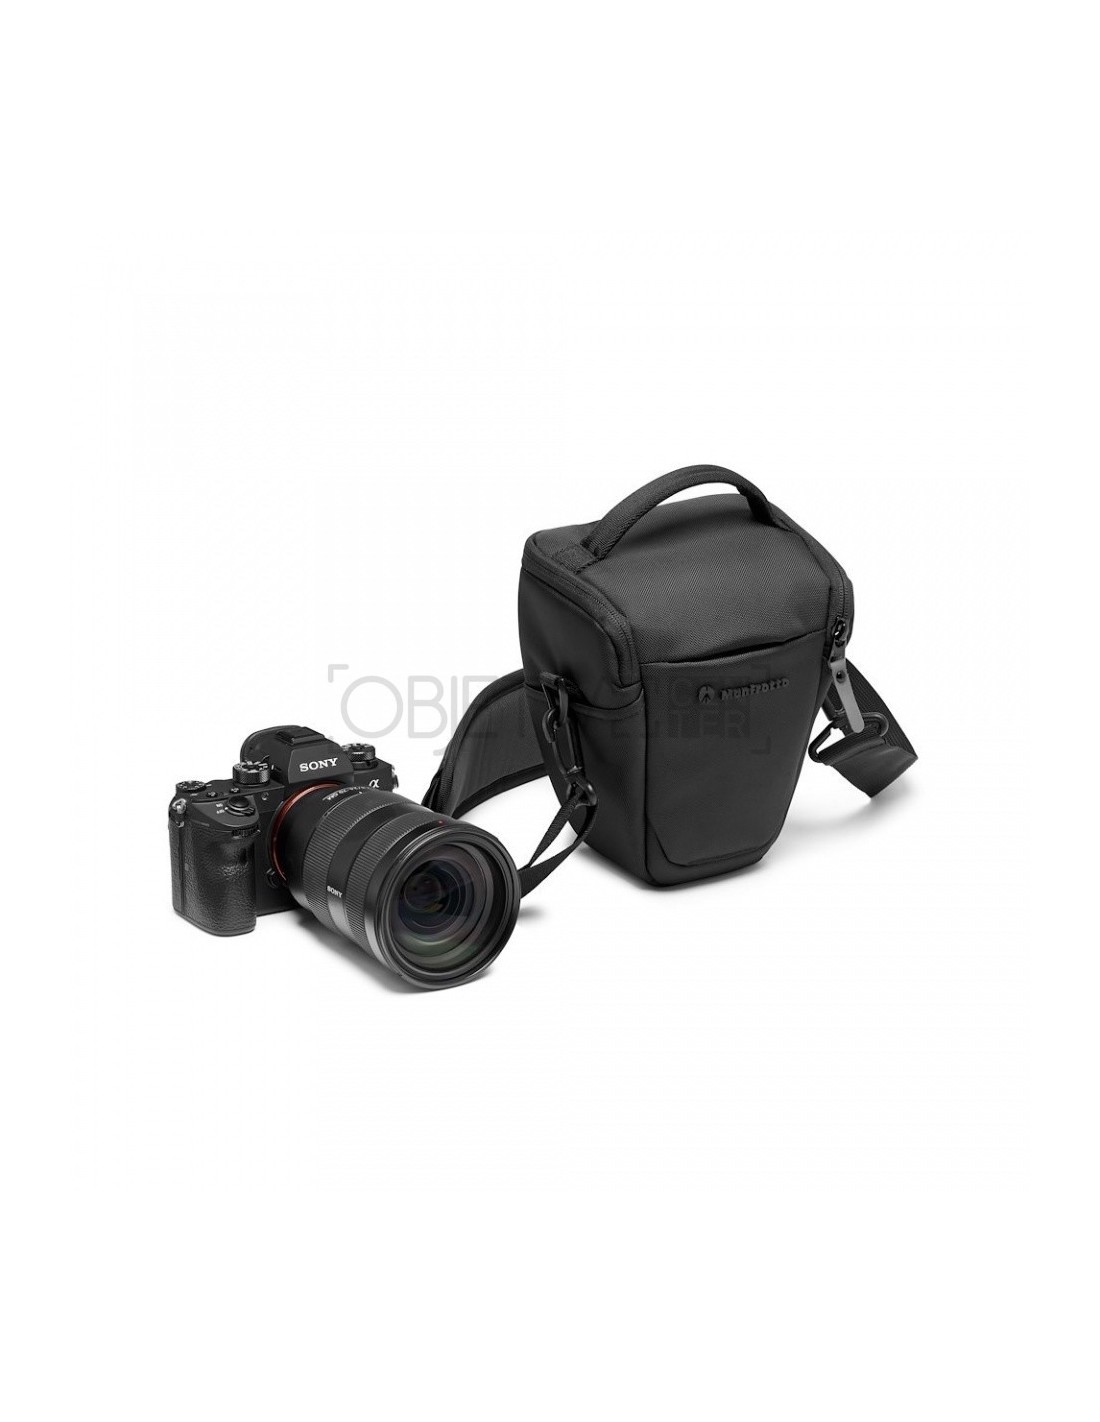 Lowepro Mochila para cámara Freeline 350 AW, color negro. Mochila versátil  diseñada para viajes, fotógrafos y videógrafos. para DSLR, sin espejo